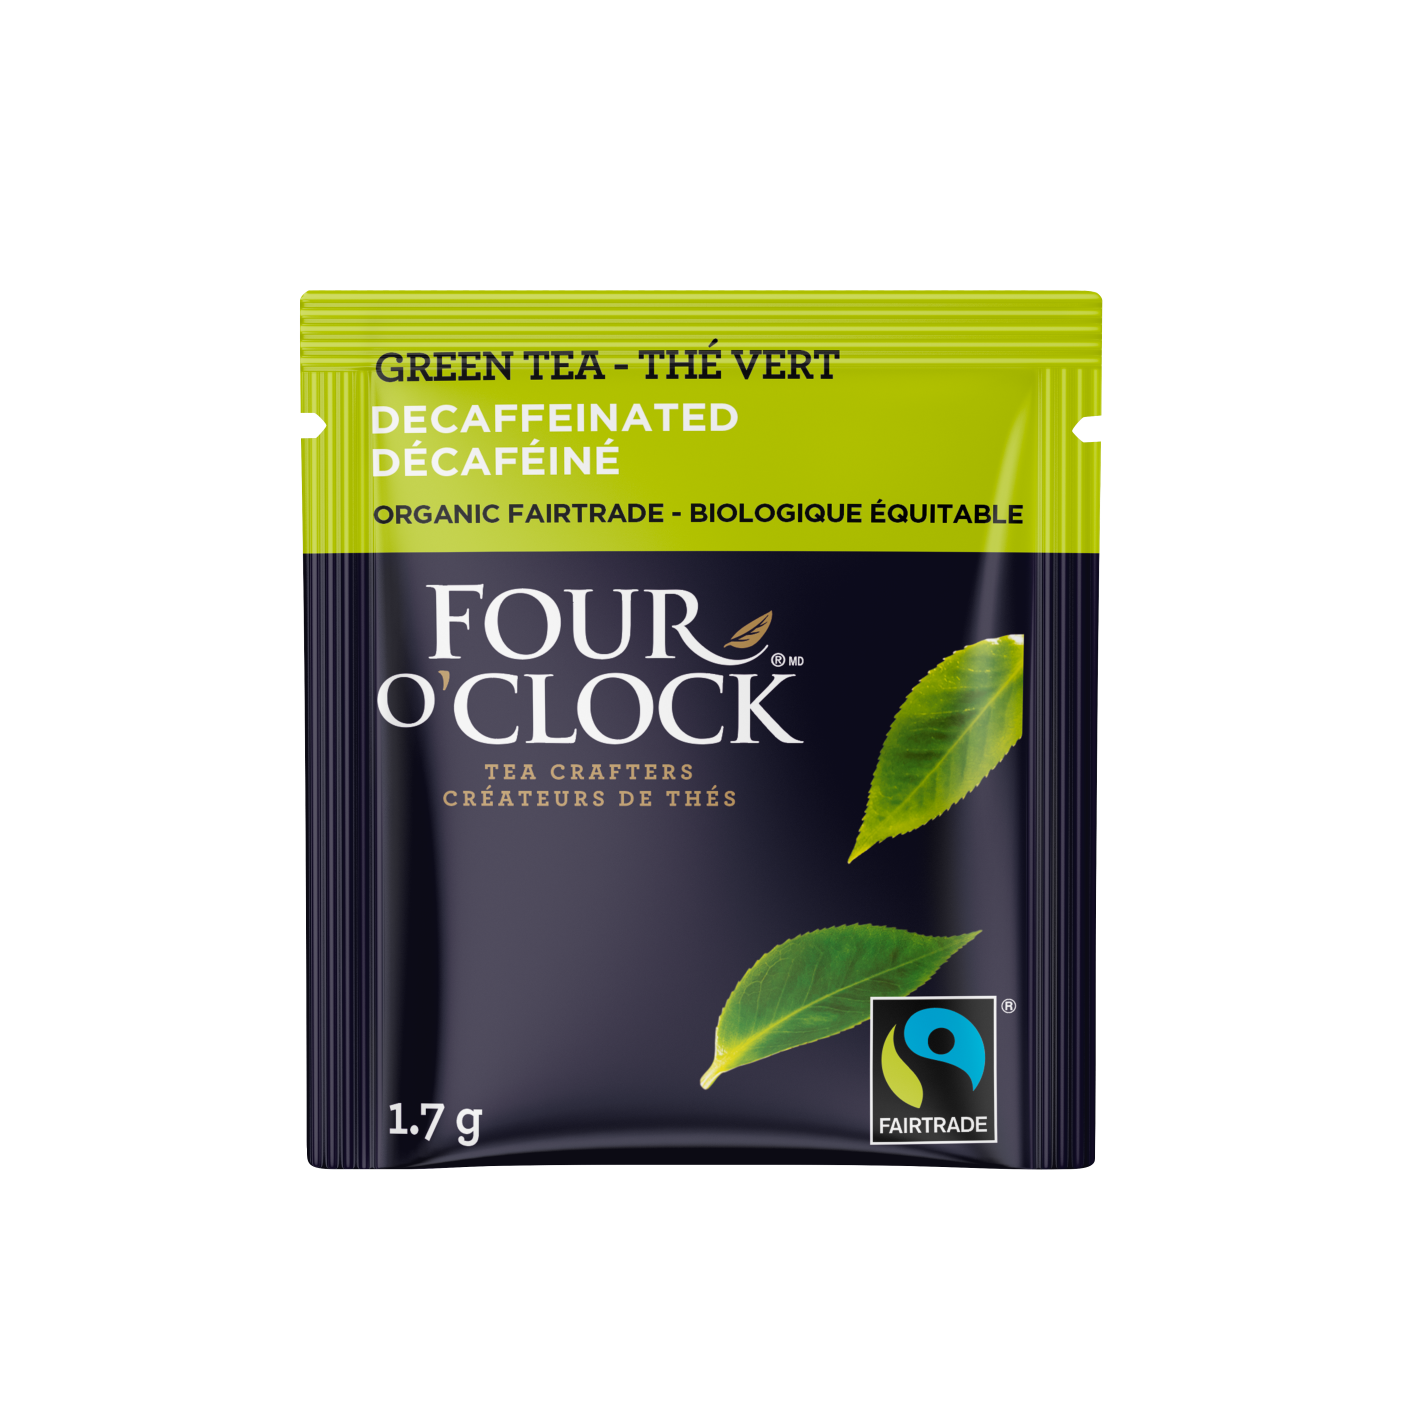 Decaffeinated Organic Fairtrade Green Tea